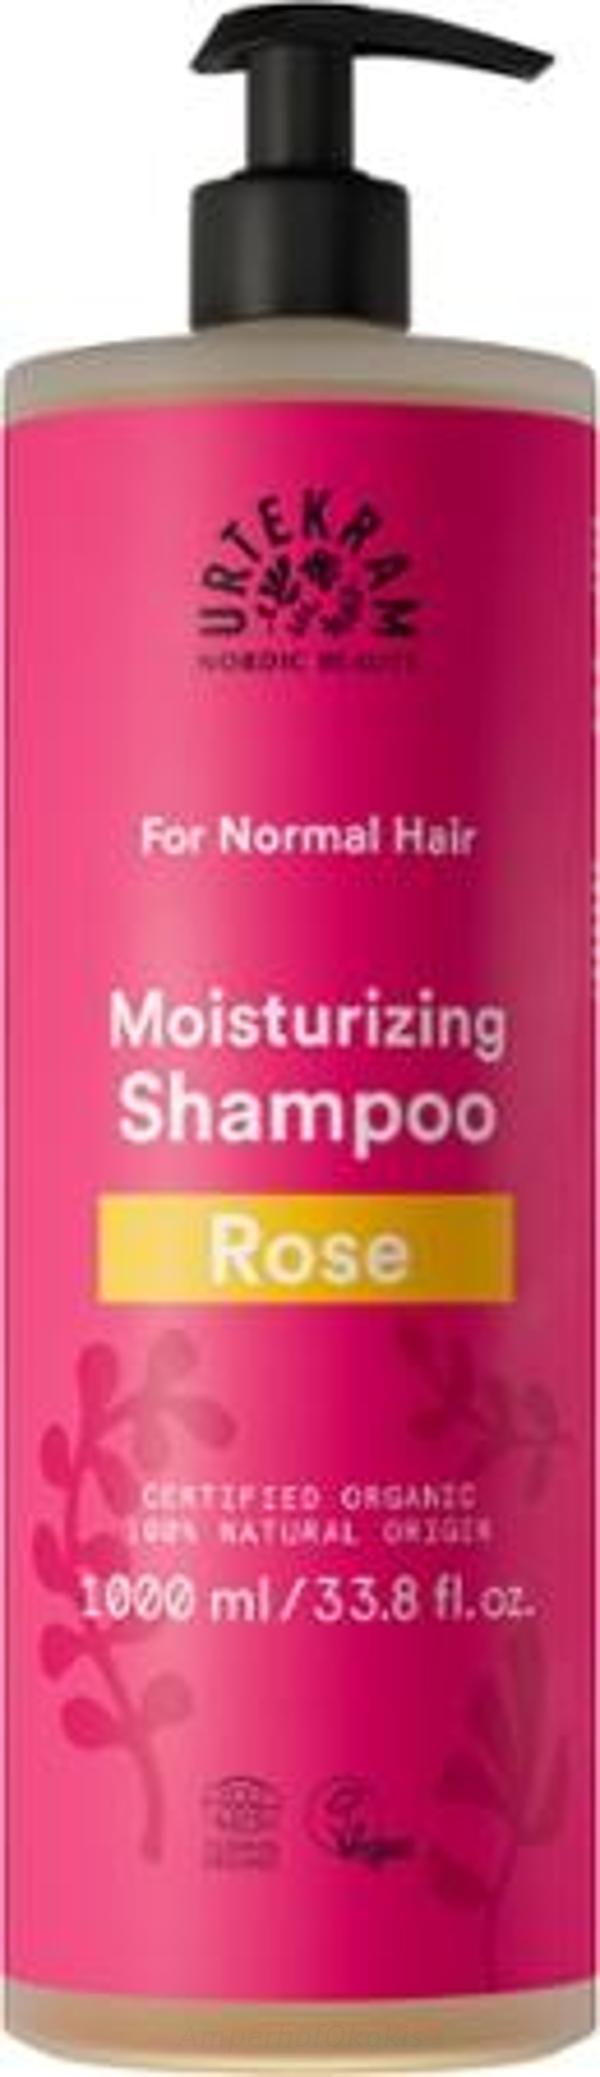 Produktfoto zu Shampoo Rose 1 l